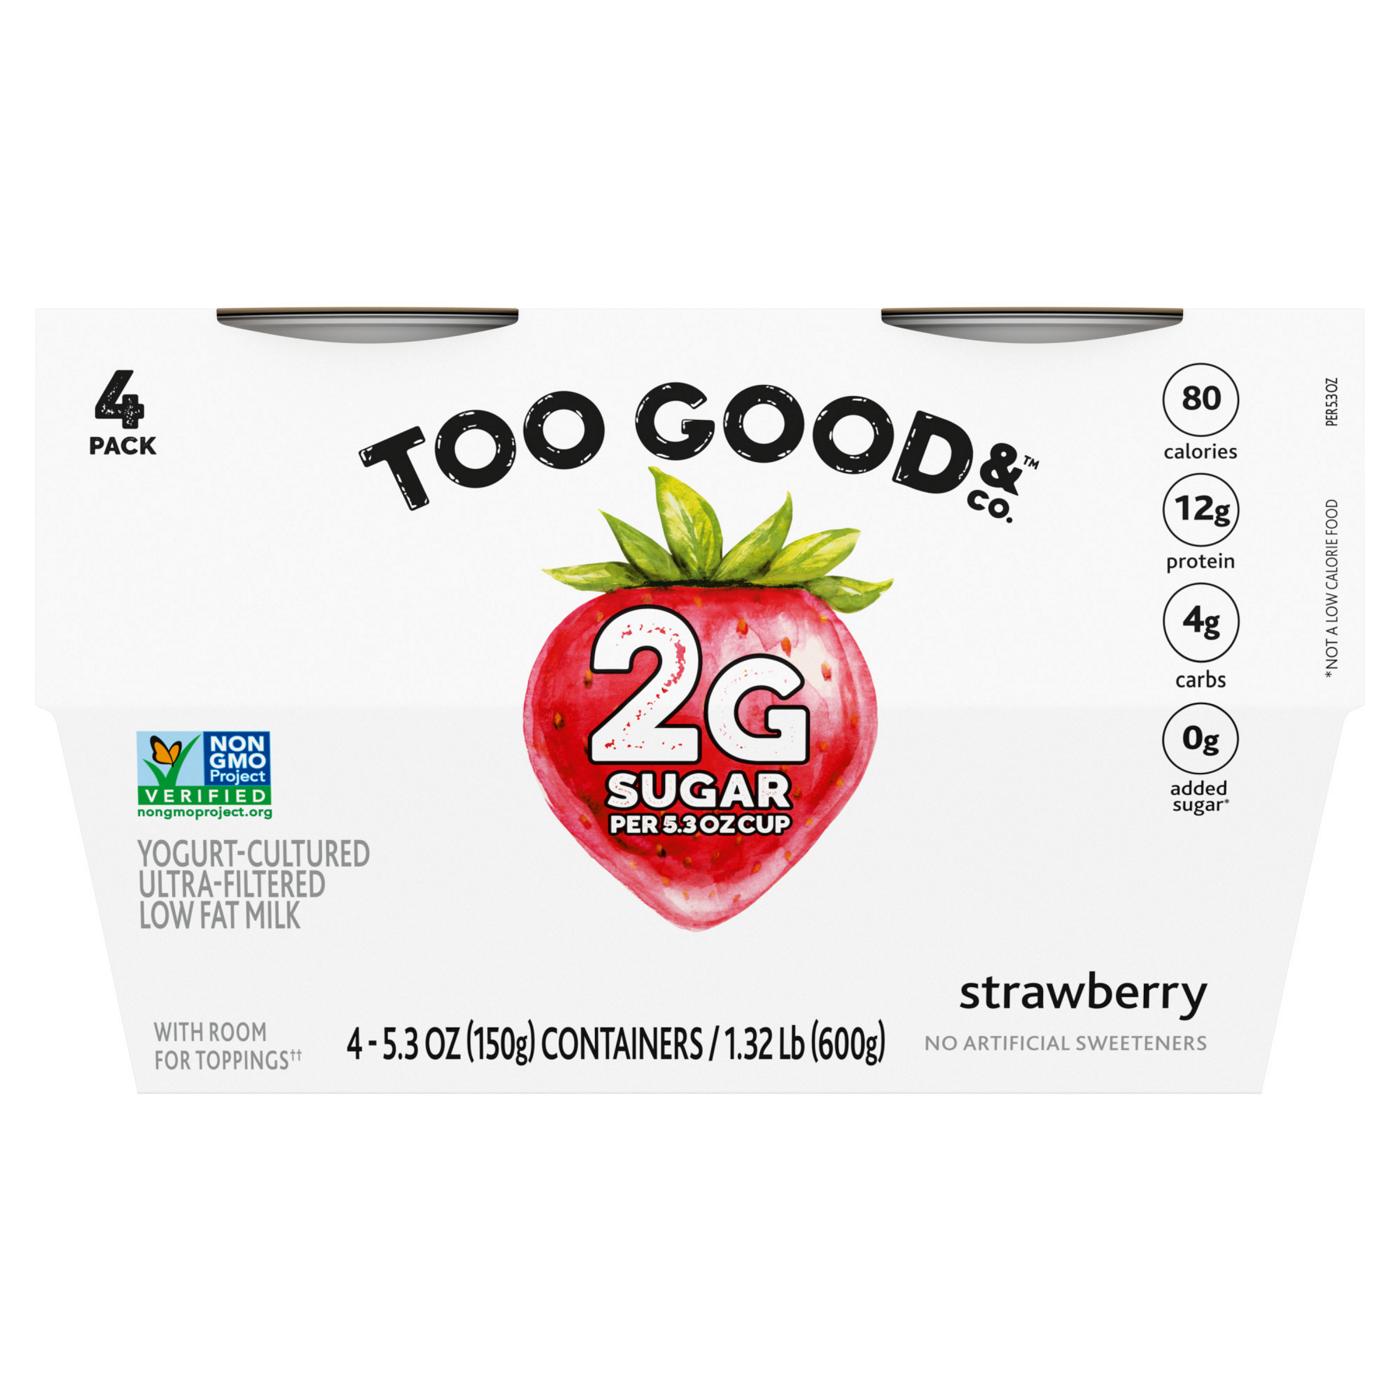 Too Good & Co. Strawberry Flavored Lower Sugar Greek Yogurt; image 1 of 2